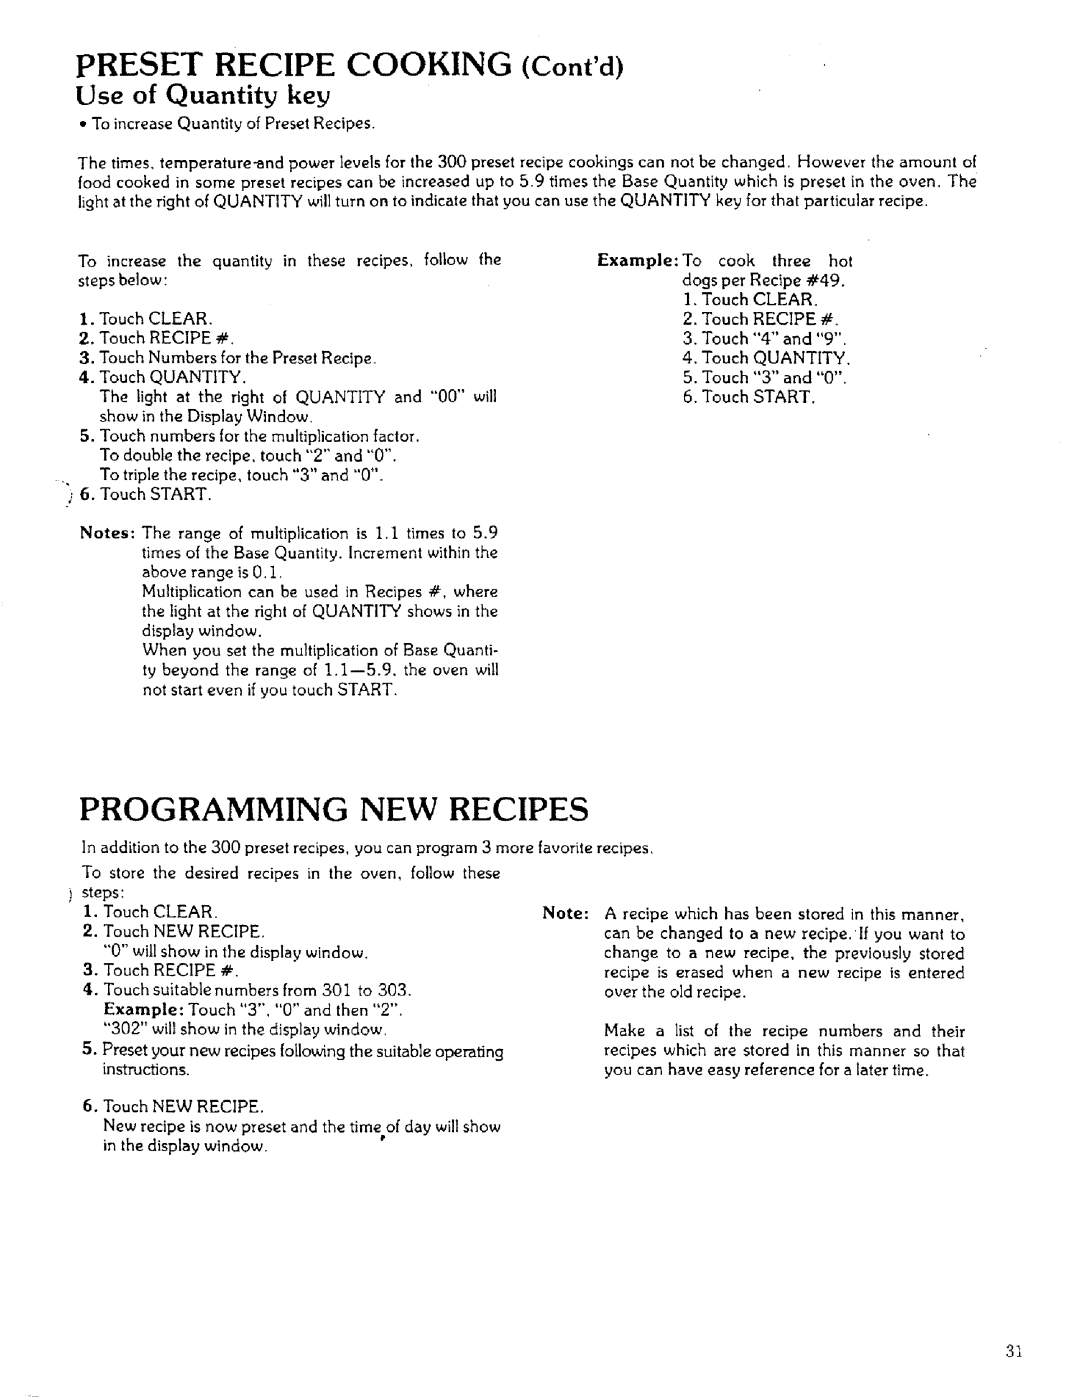 Sears 85951 manual Programming, Recipes, Use of Quantity key, PRESET RECIPE COOKING Contd, three 